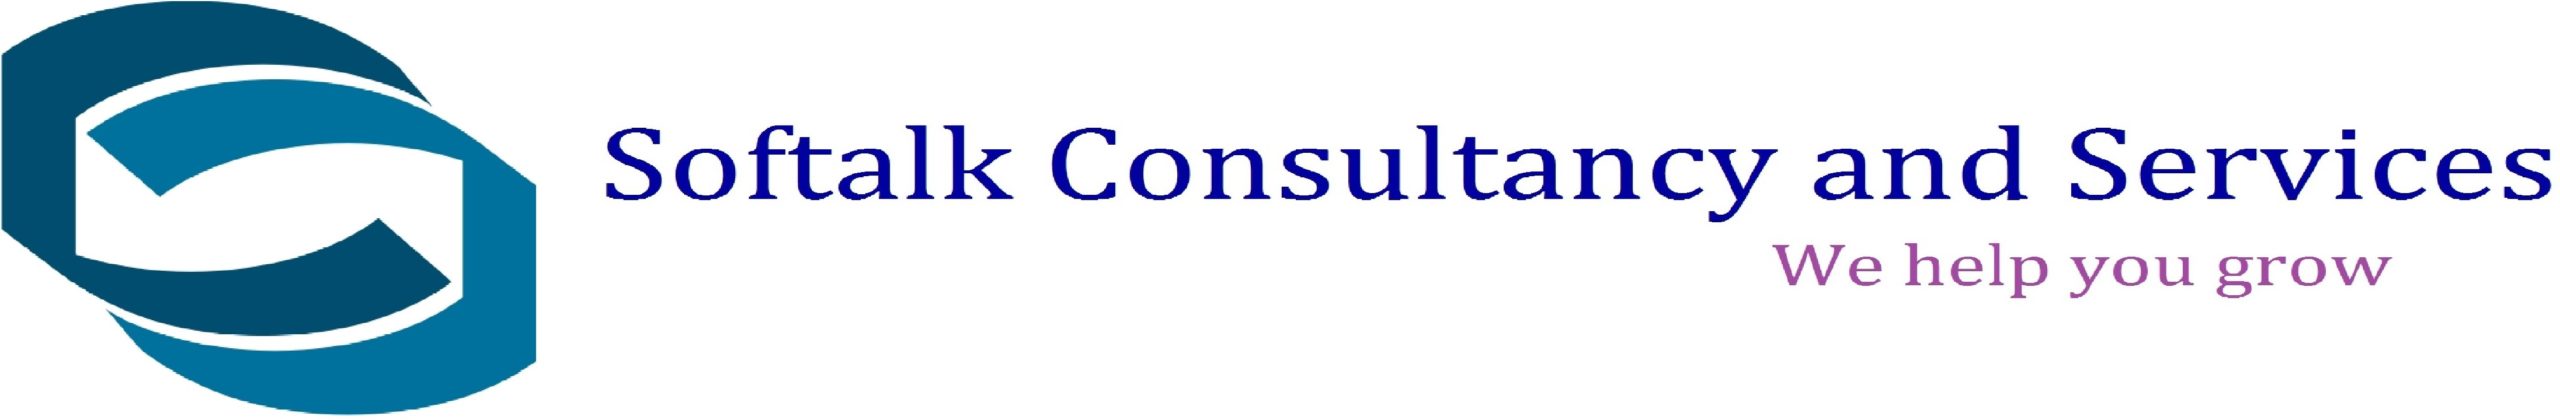 Softalk Consultancy and Services Logo